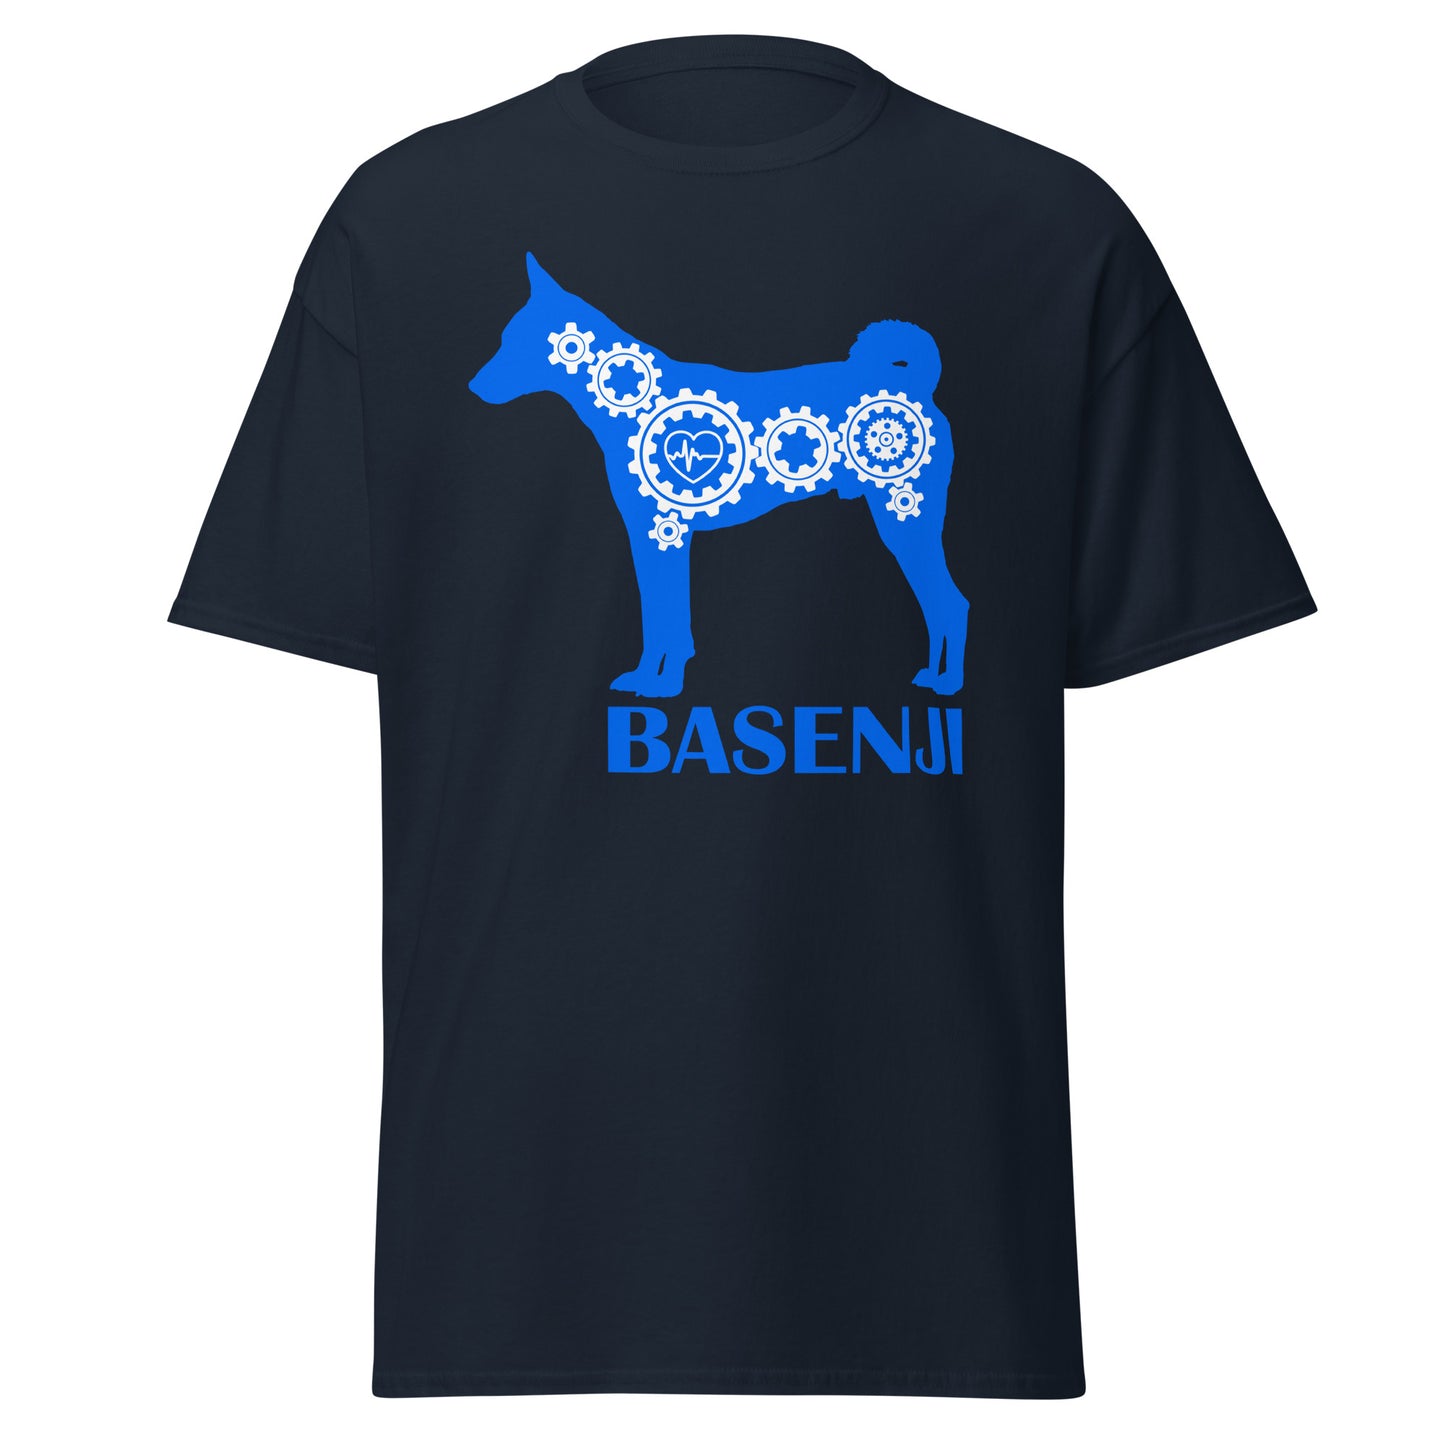 Basenji Bionic men’s navy t-shirt by Dog Artistry.